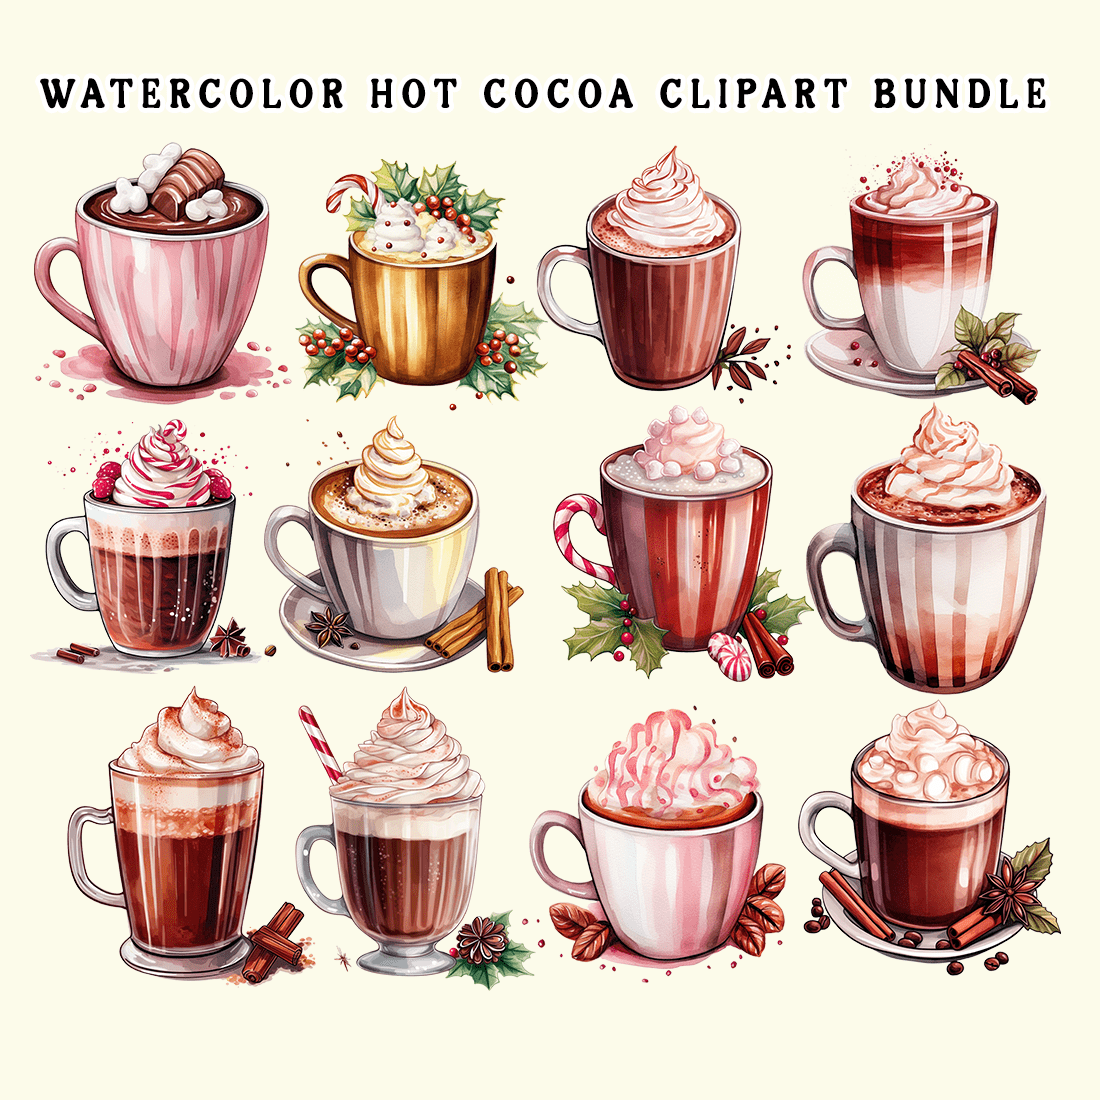 Watercolor Hot Cocoa Clipart Bundle preview image.